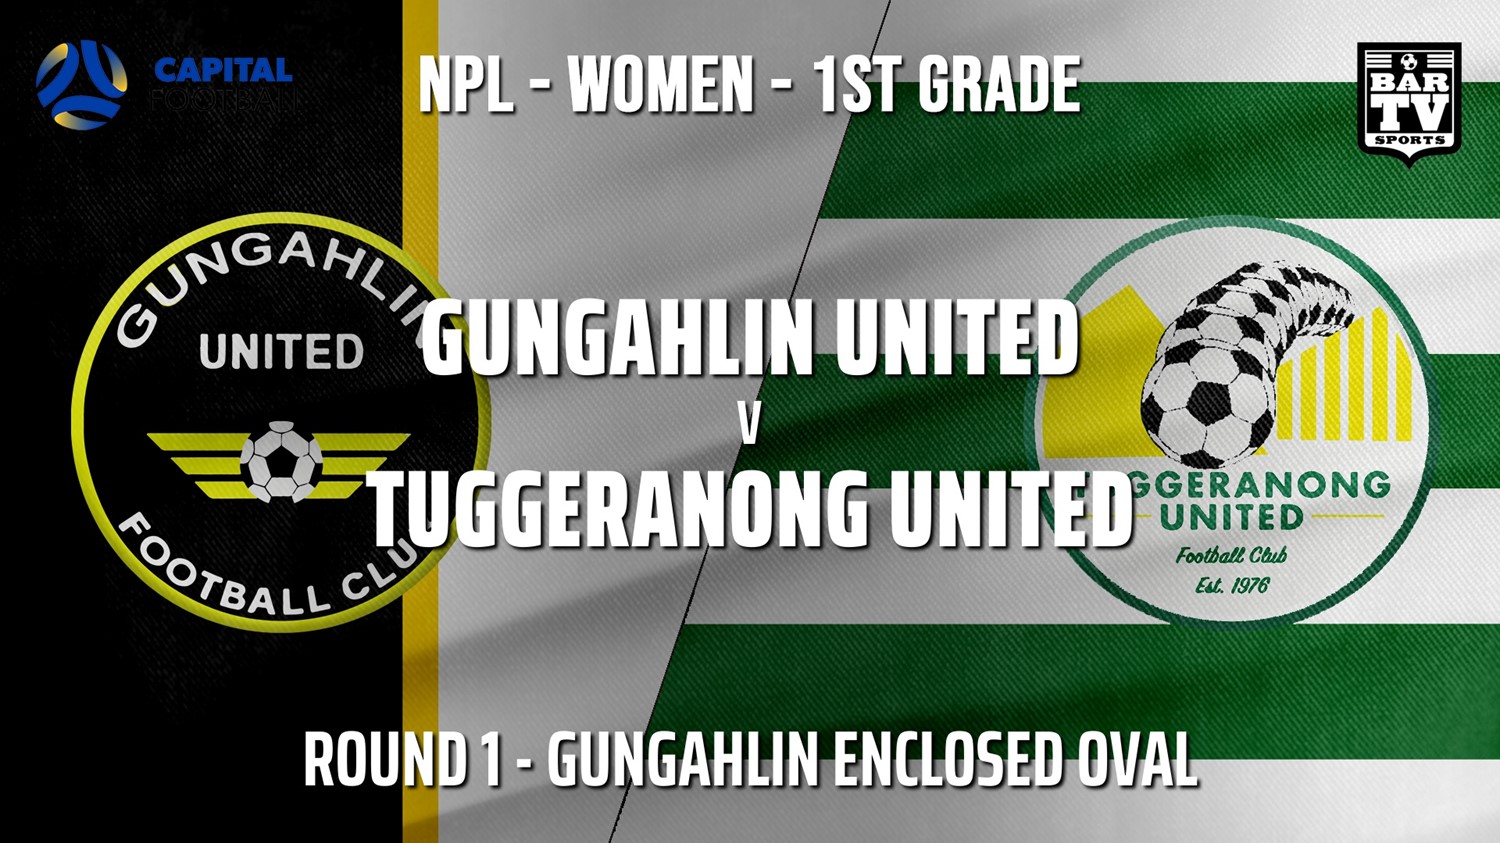 NPLW - Capital Round 1 - Gungahlin United FC (women) v Tuggeranong United FC (women) Minigame Slate Image